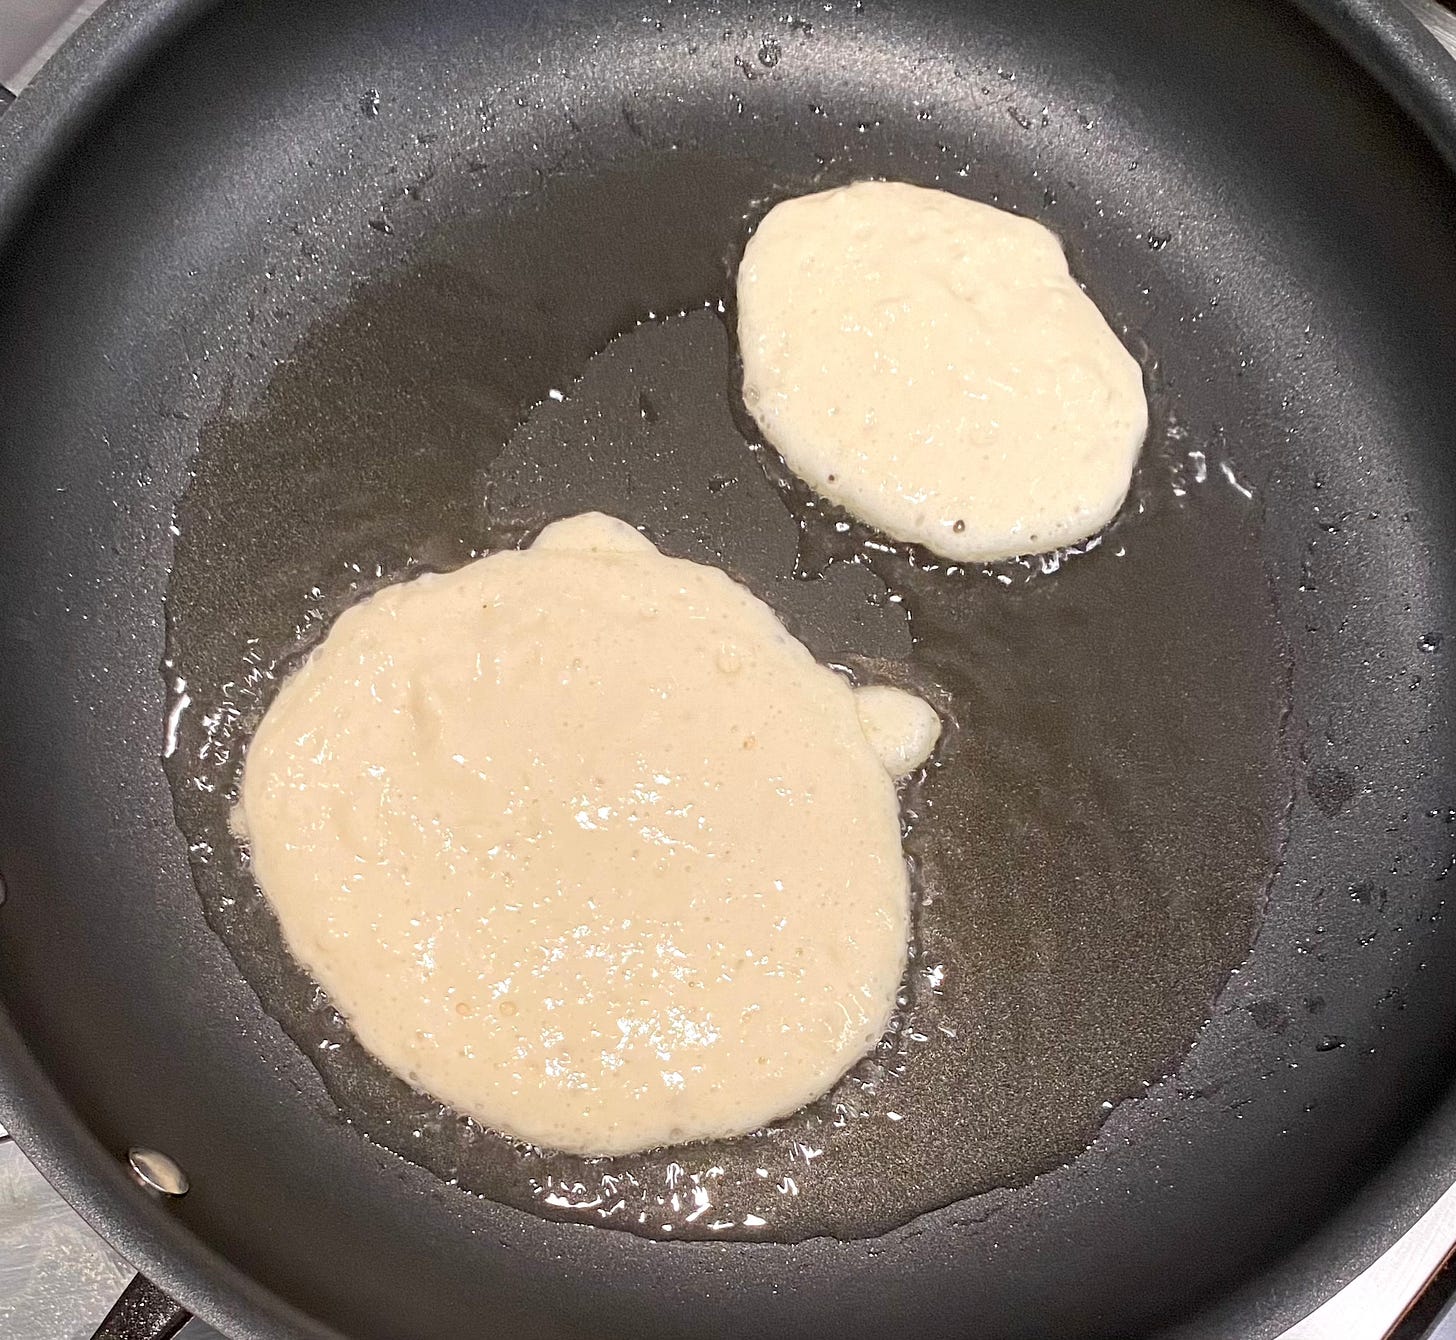 Copycat IHOP Buttermilk Pancakes - The Cozy Cook